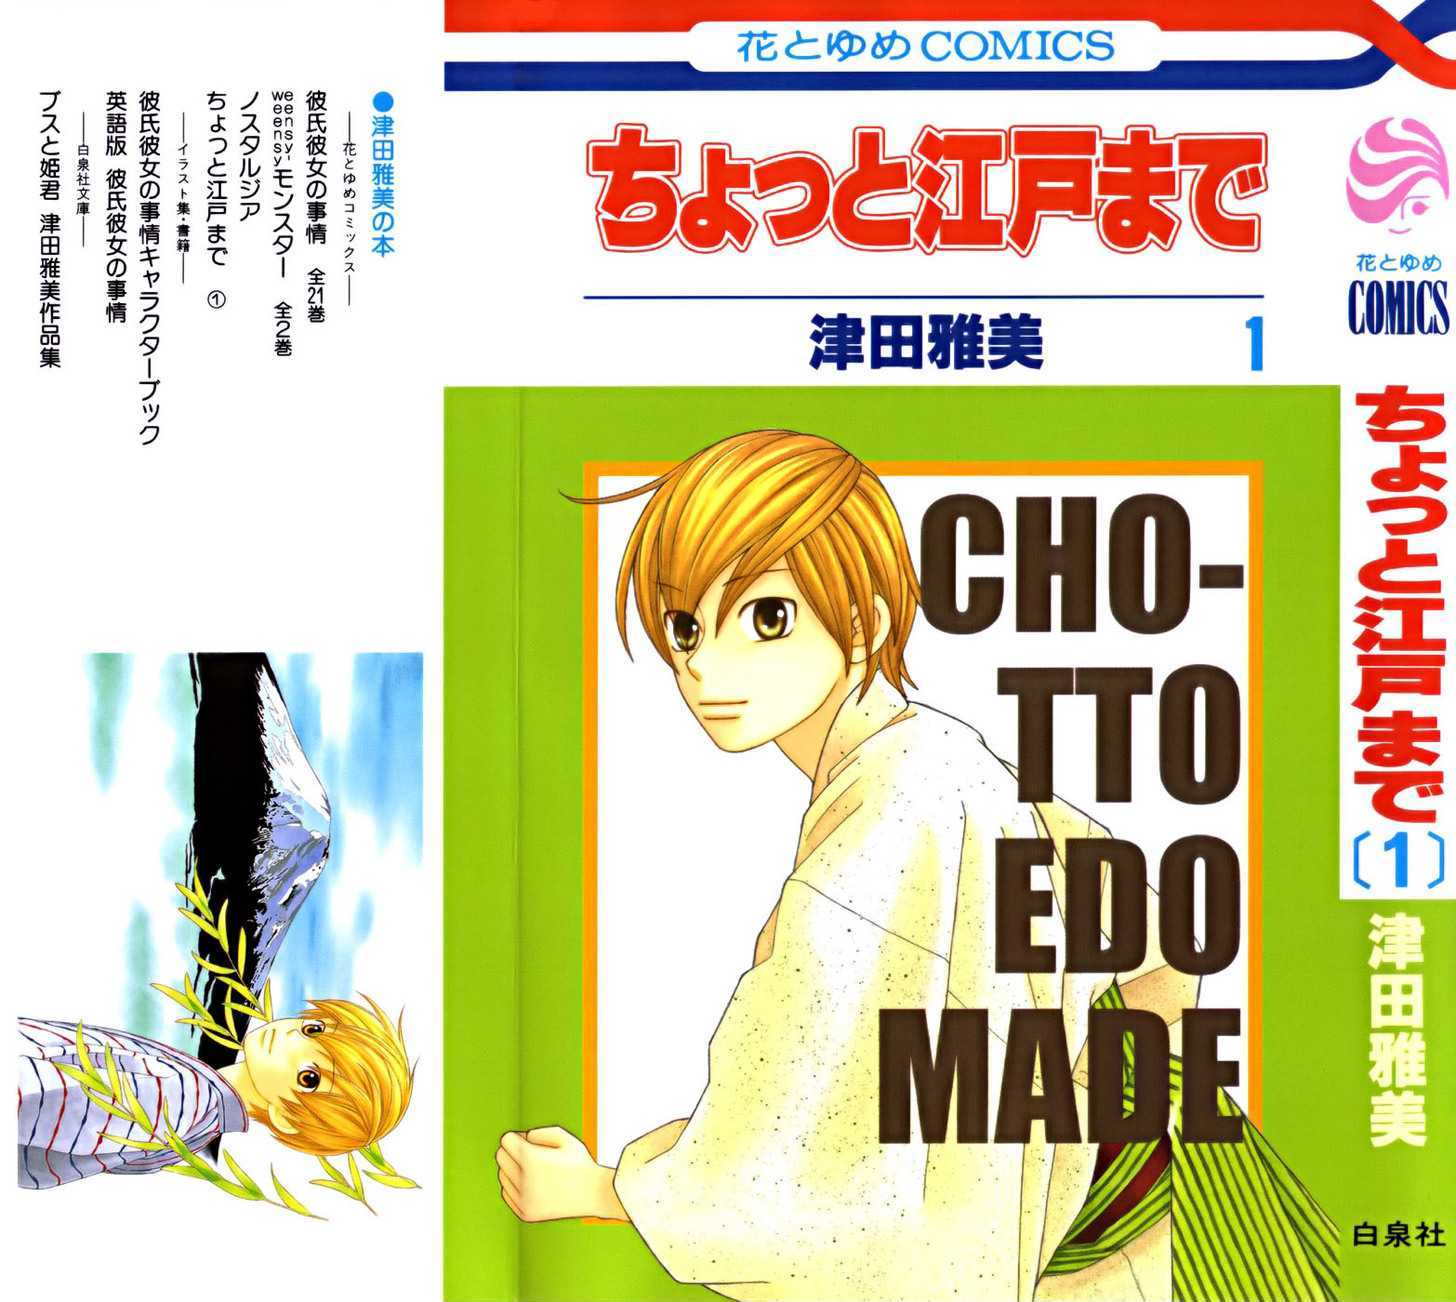 Chotto Edo Made - Page 1